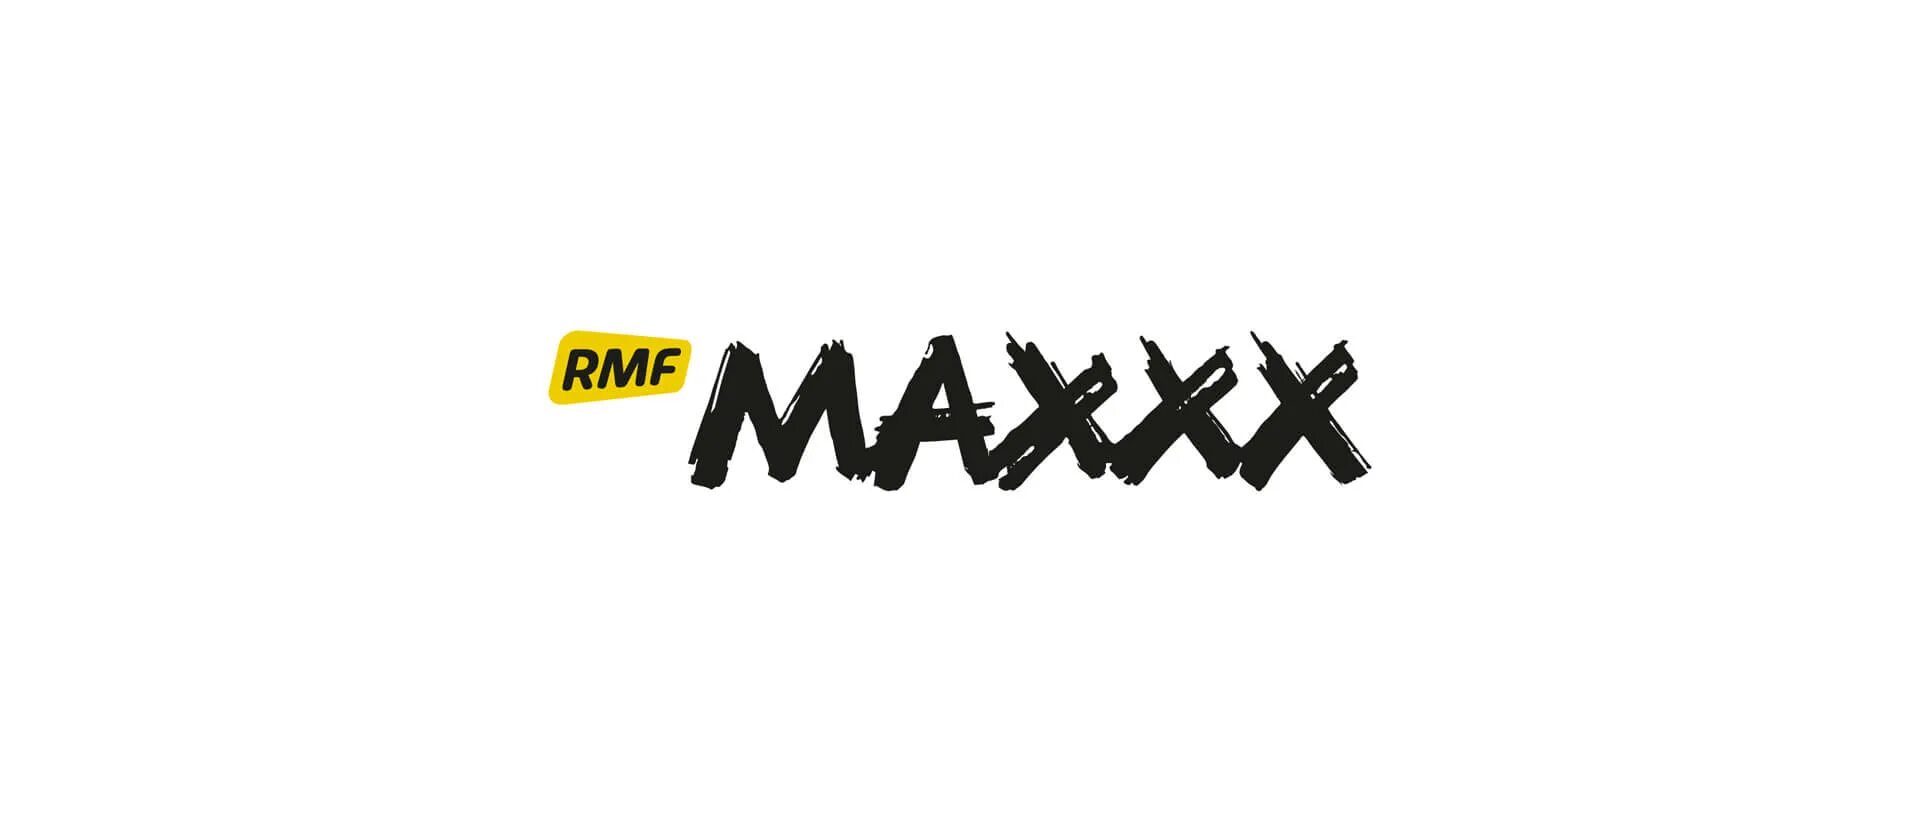 Rmf fm. Лого Max fm. РМФ ФМ. RMF. RMF Radio logo.